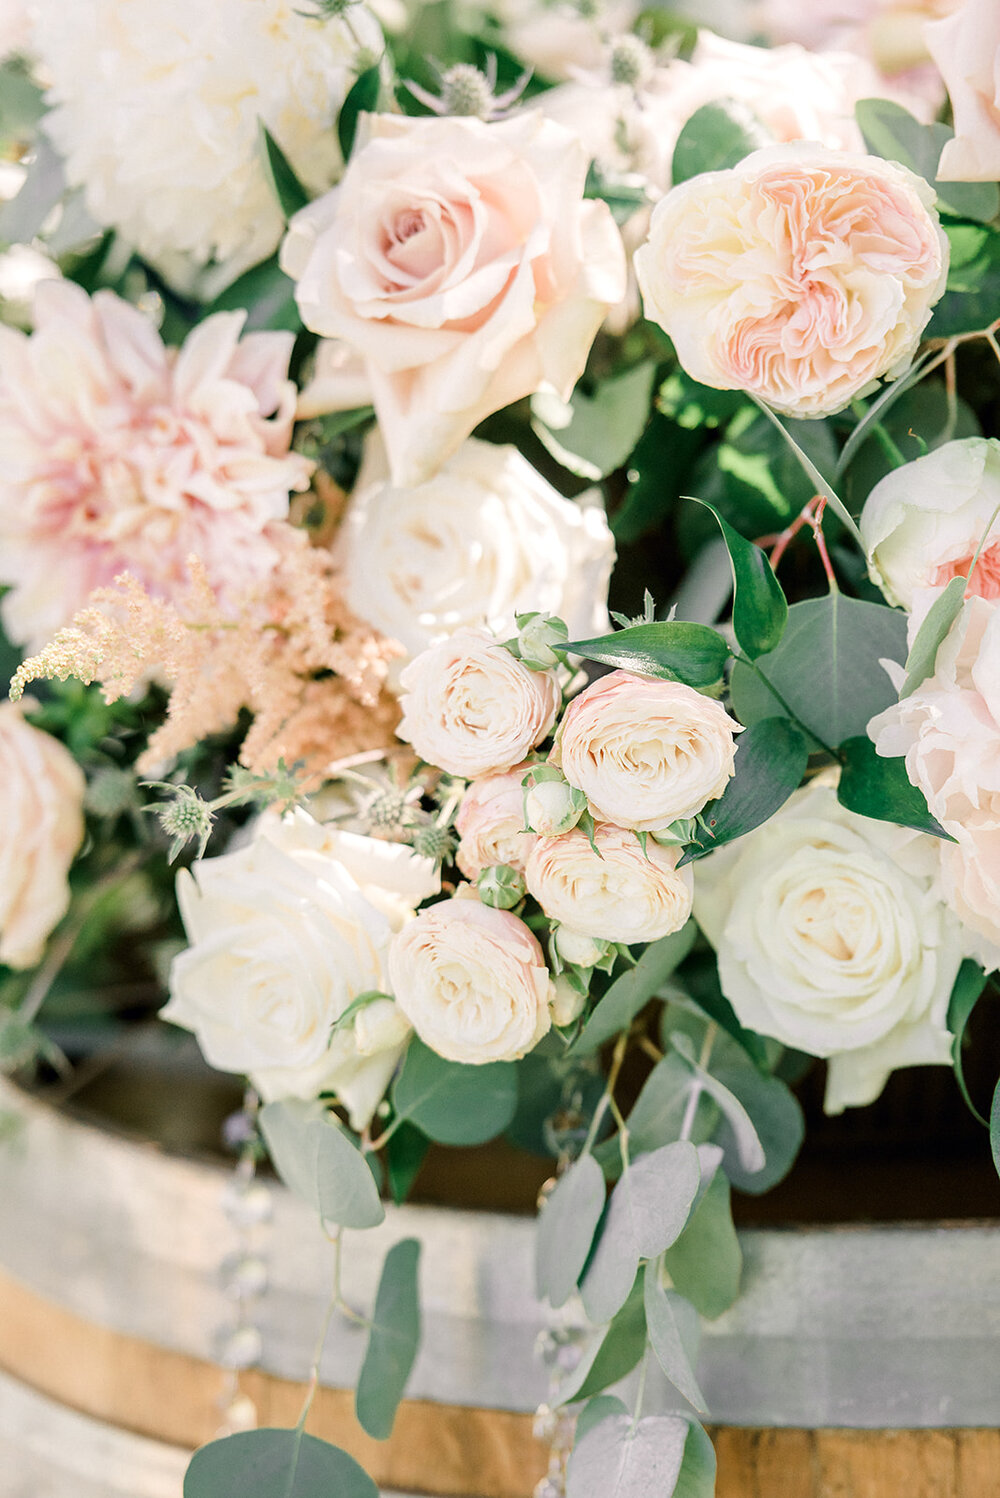 Violette-fleurs-roseville-napa-california-luxury-florist-silverado-resort-and-spa- weddings-by-scott-and-dana-roses-dafe-au-lait-dahlia.jpg